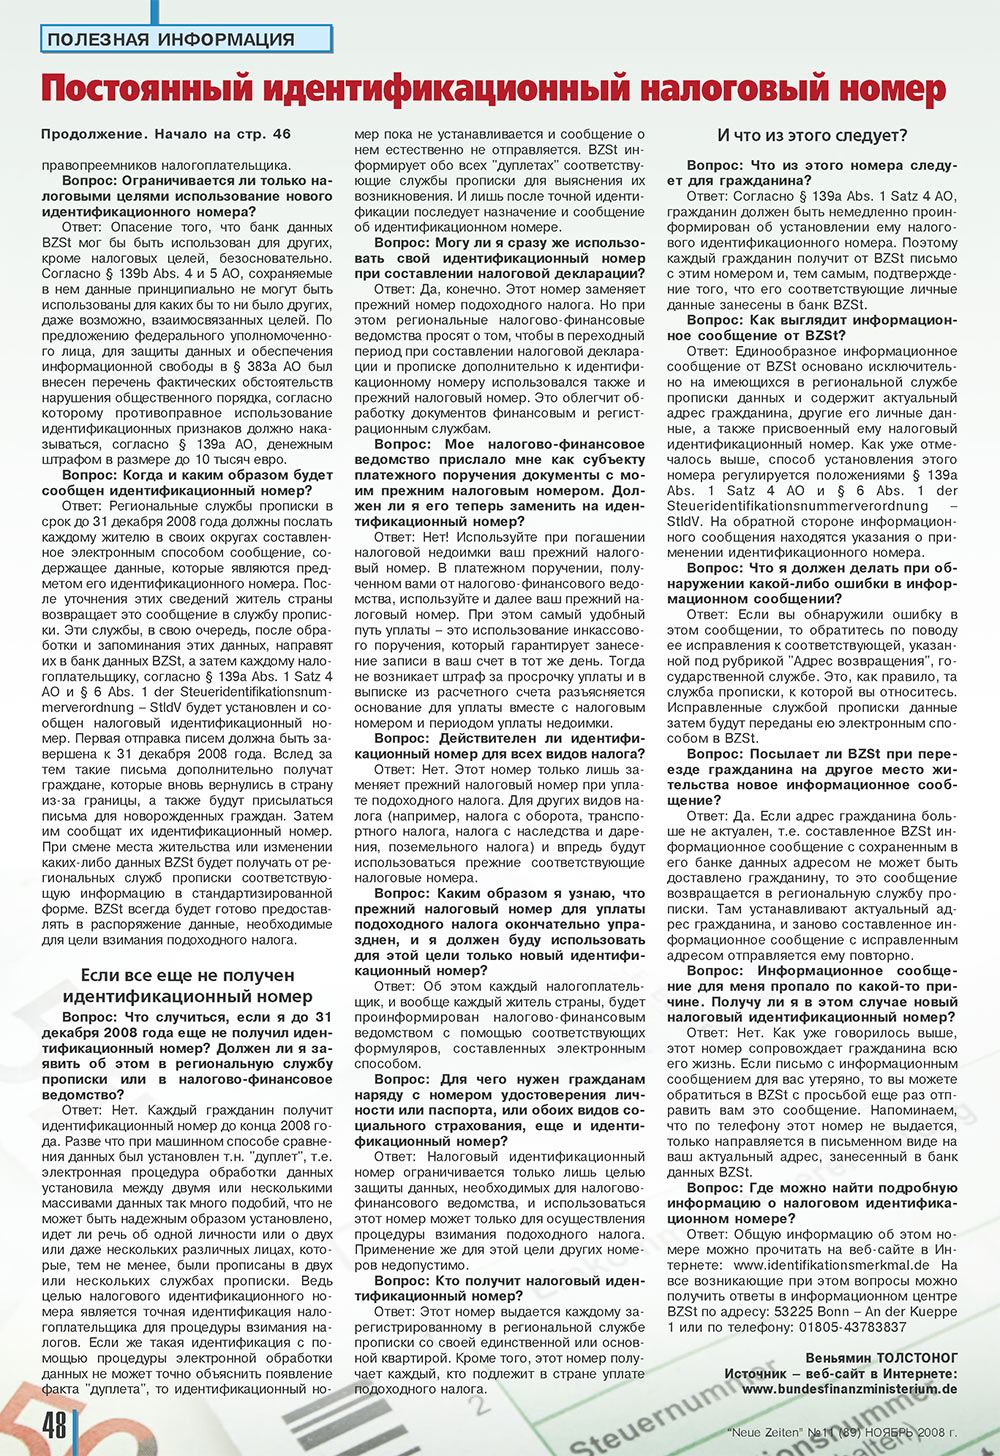 Neue Zeiten (журнал). 2008 год, номер 11, стр. 48